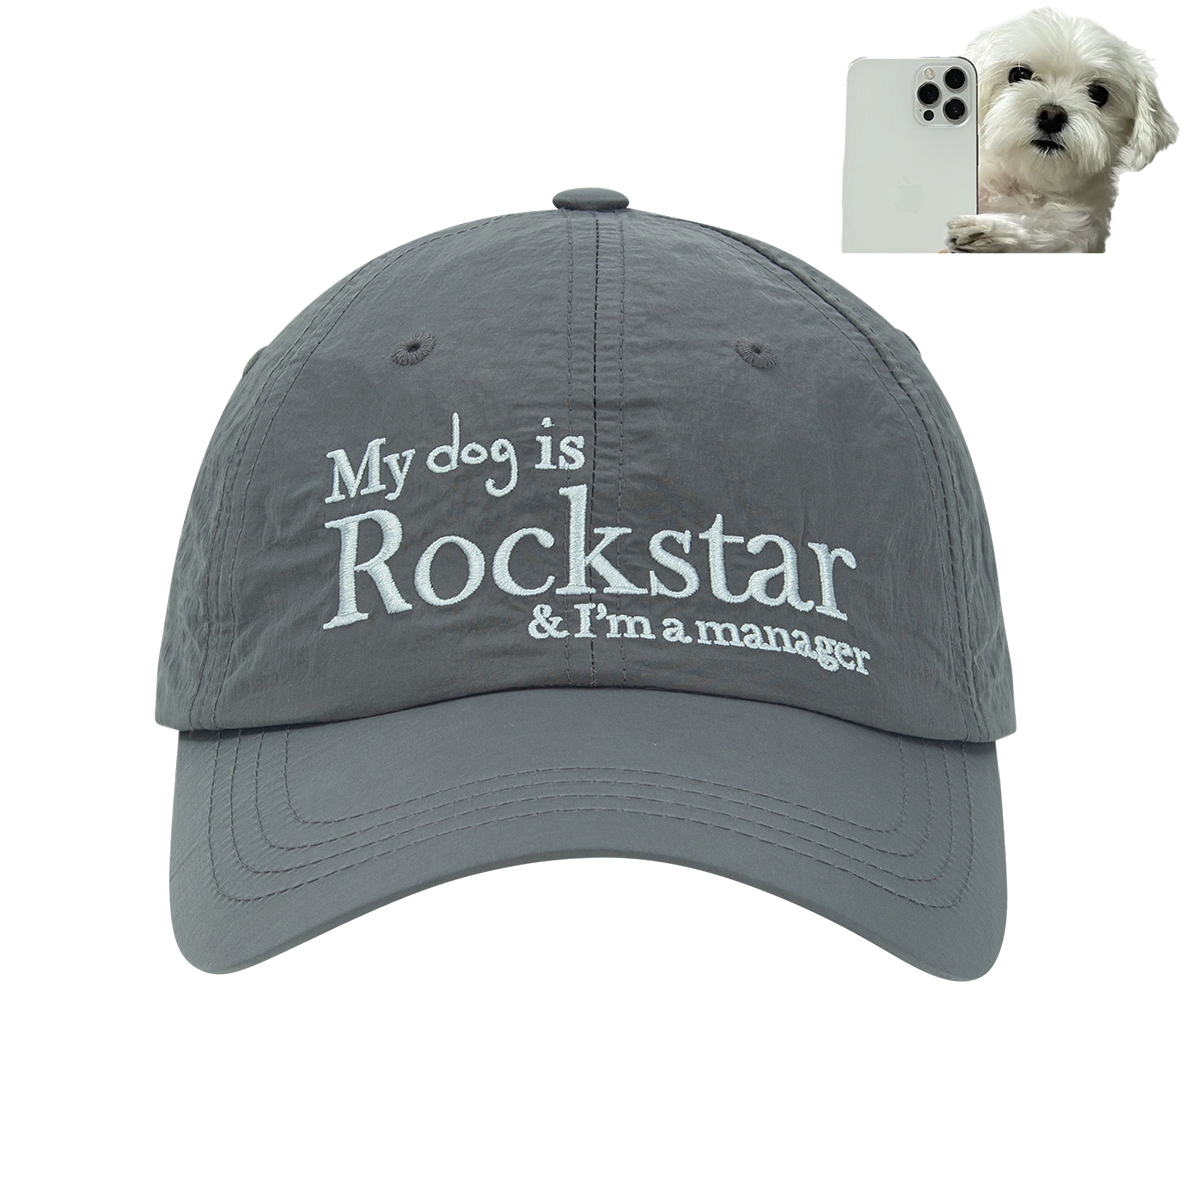 Rockstar dog Nylon cap (Charcoal)